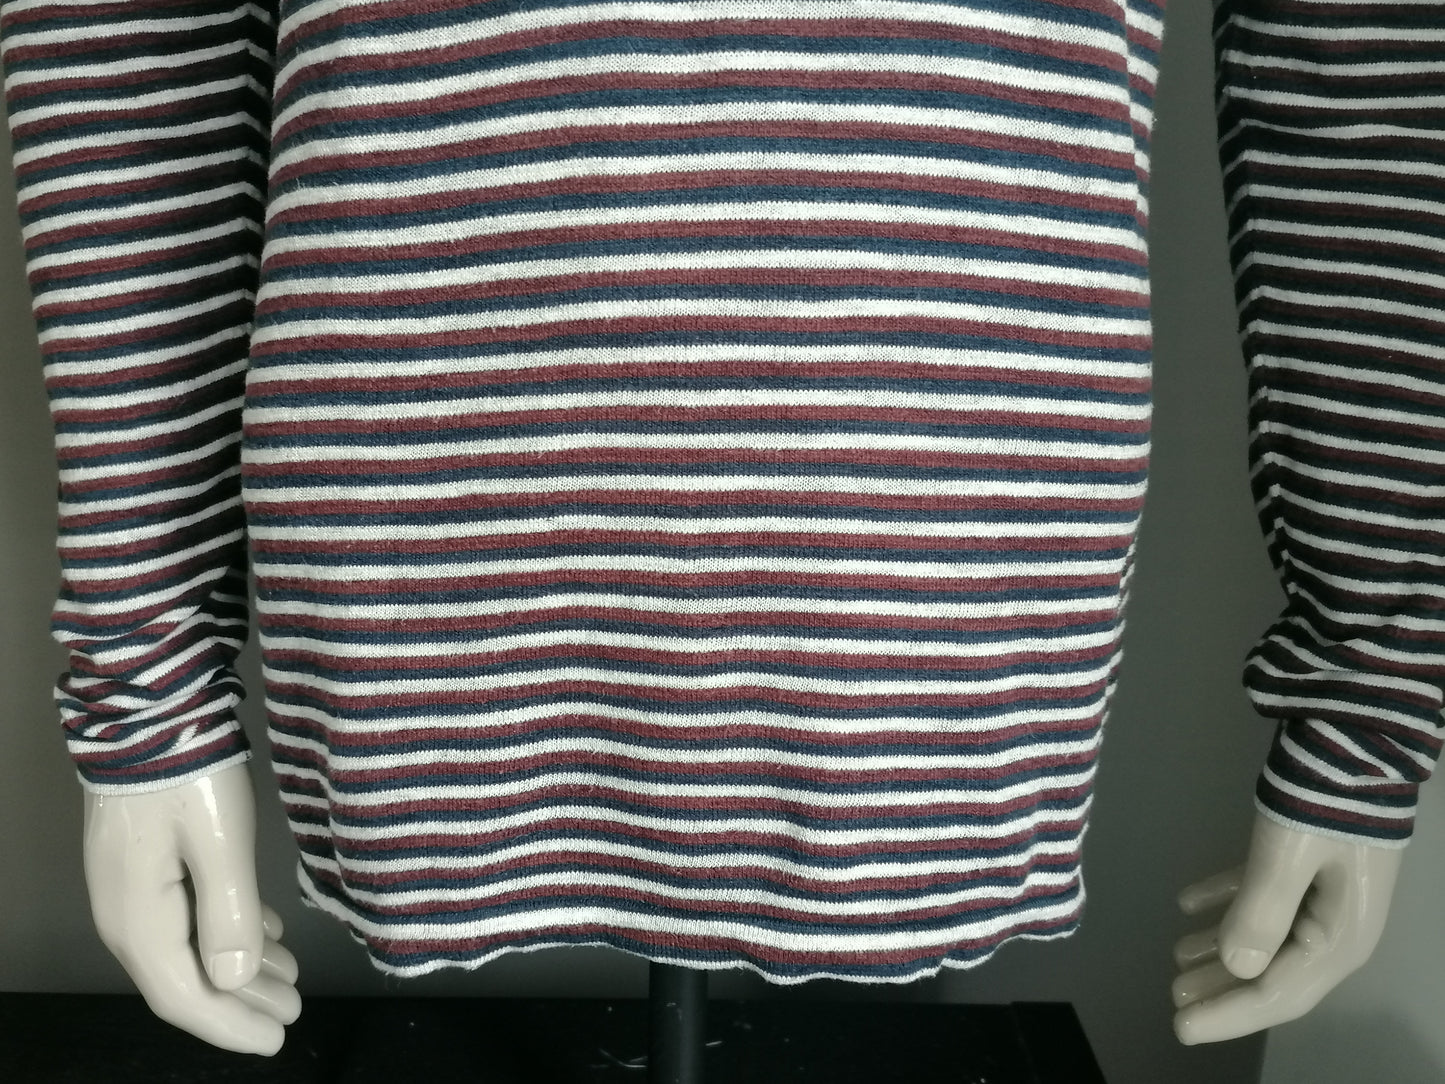 Blue ridge thin sweater. Brown blue white striped. Size L.